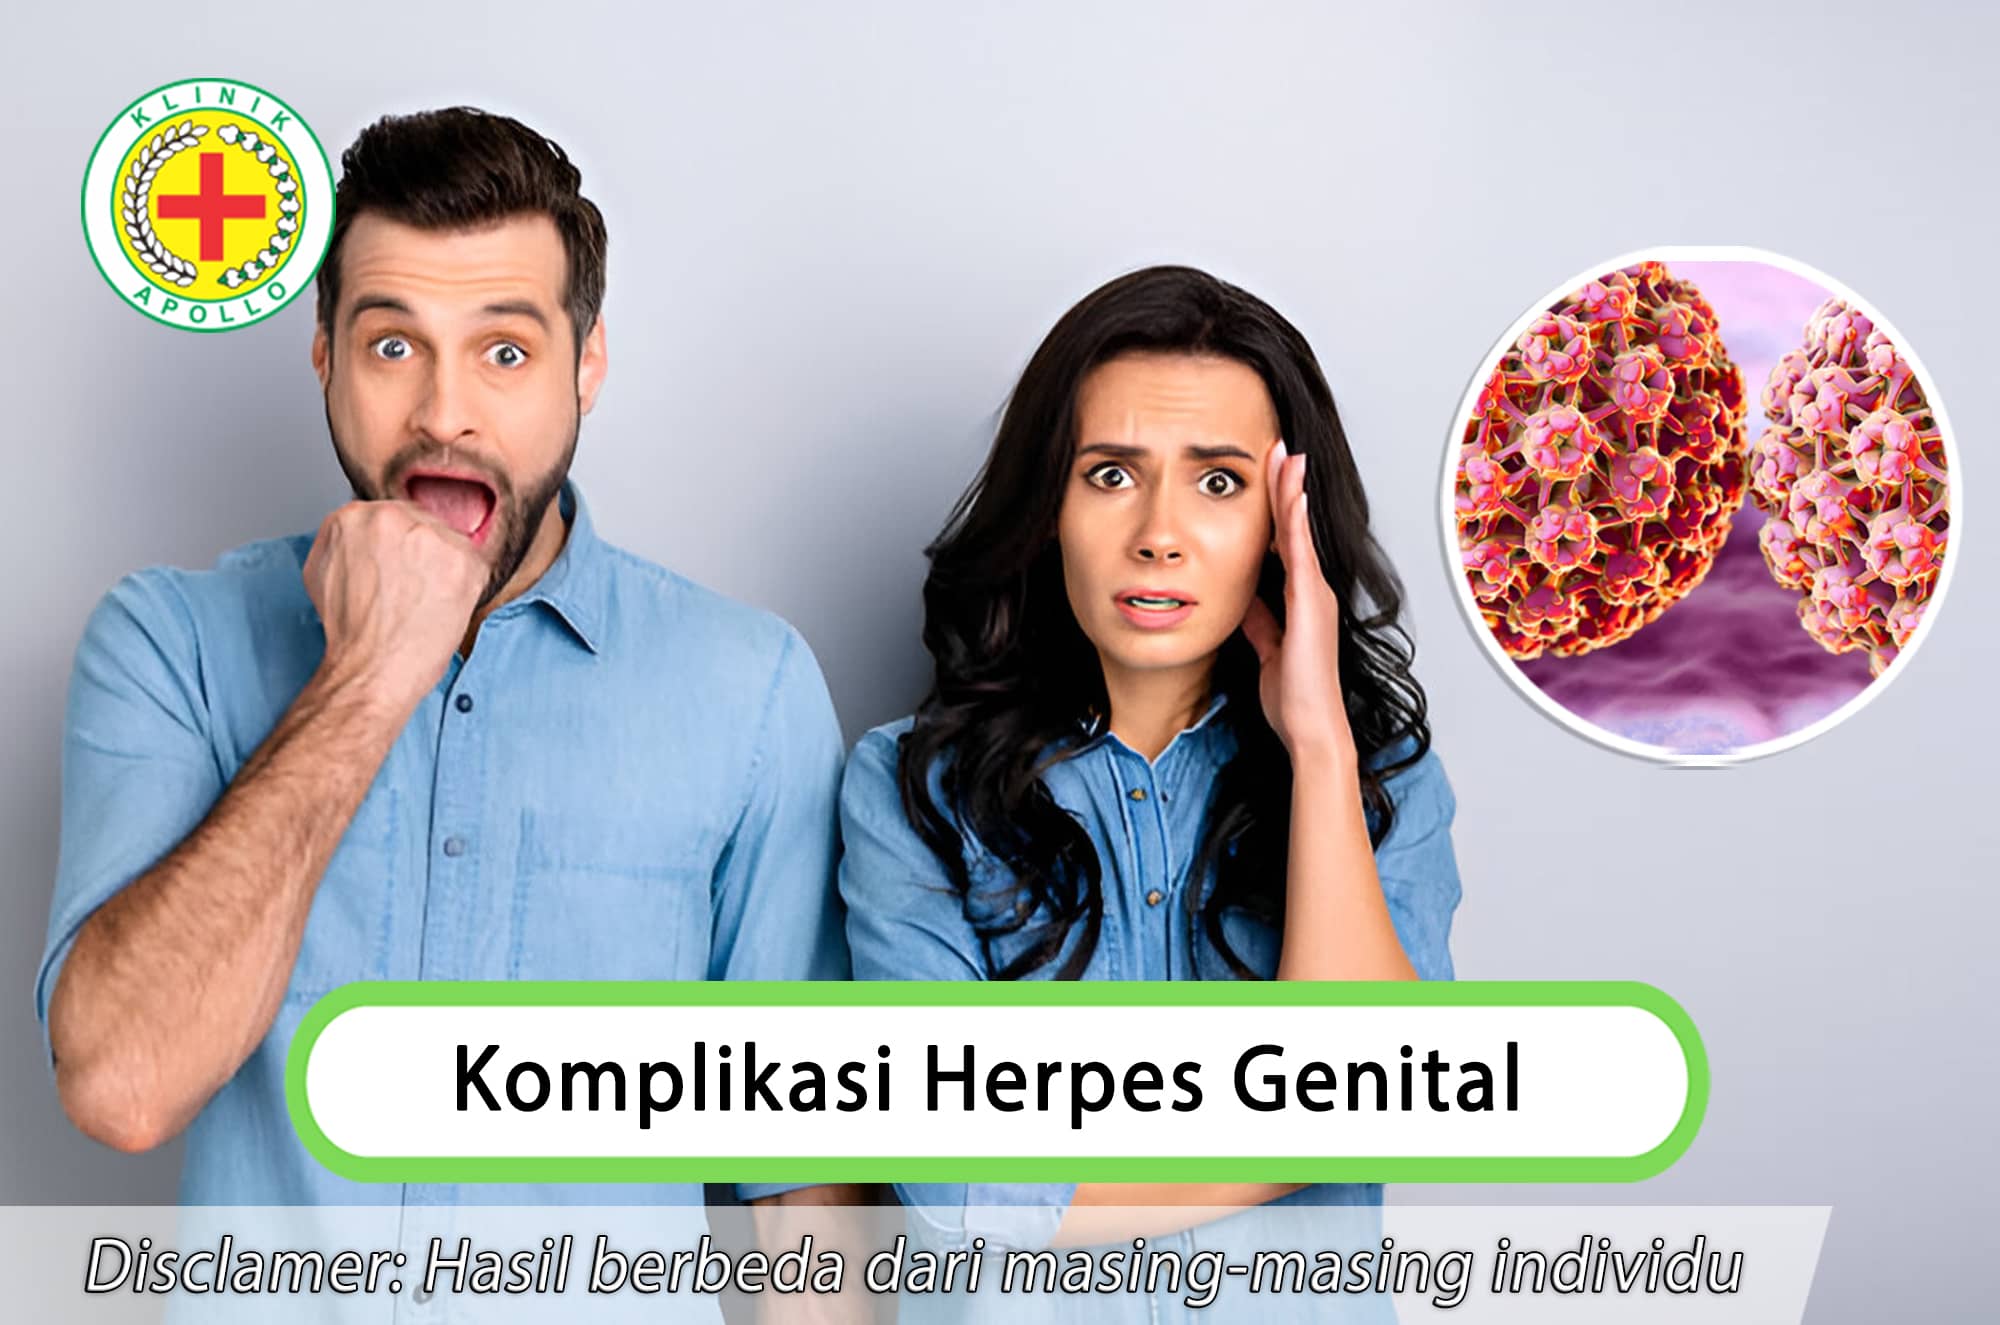 Komplikasi herpes genital dapat diketahui dengan pemeriksaan dokter ahli di Klinik Apollo.